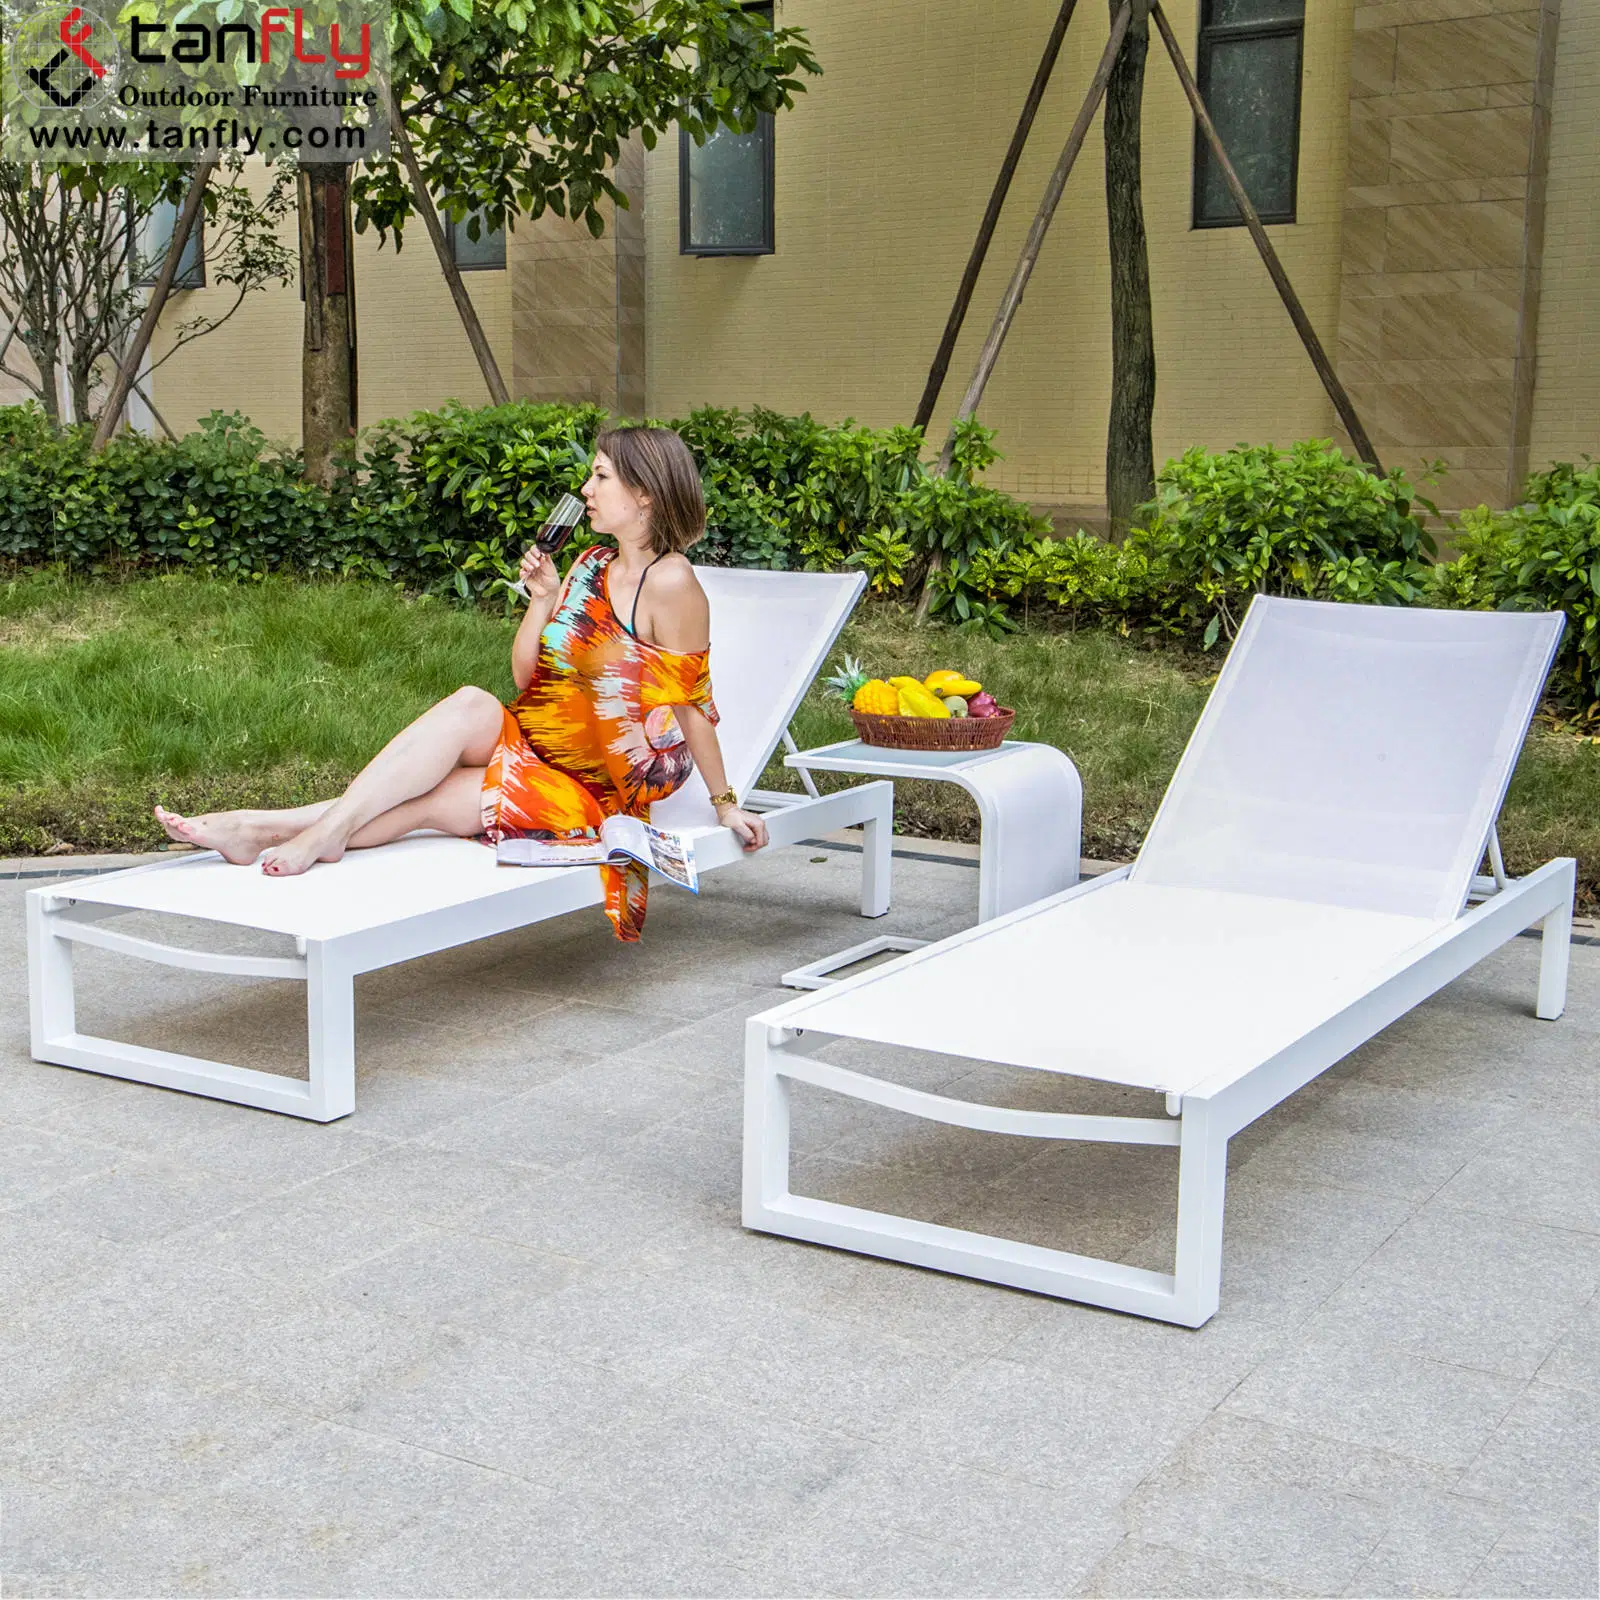 Garden Hotel Playa Piscina muebles Silla Hamaca de mimbre Rattan chaise lounge al aire libre hamacas